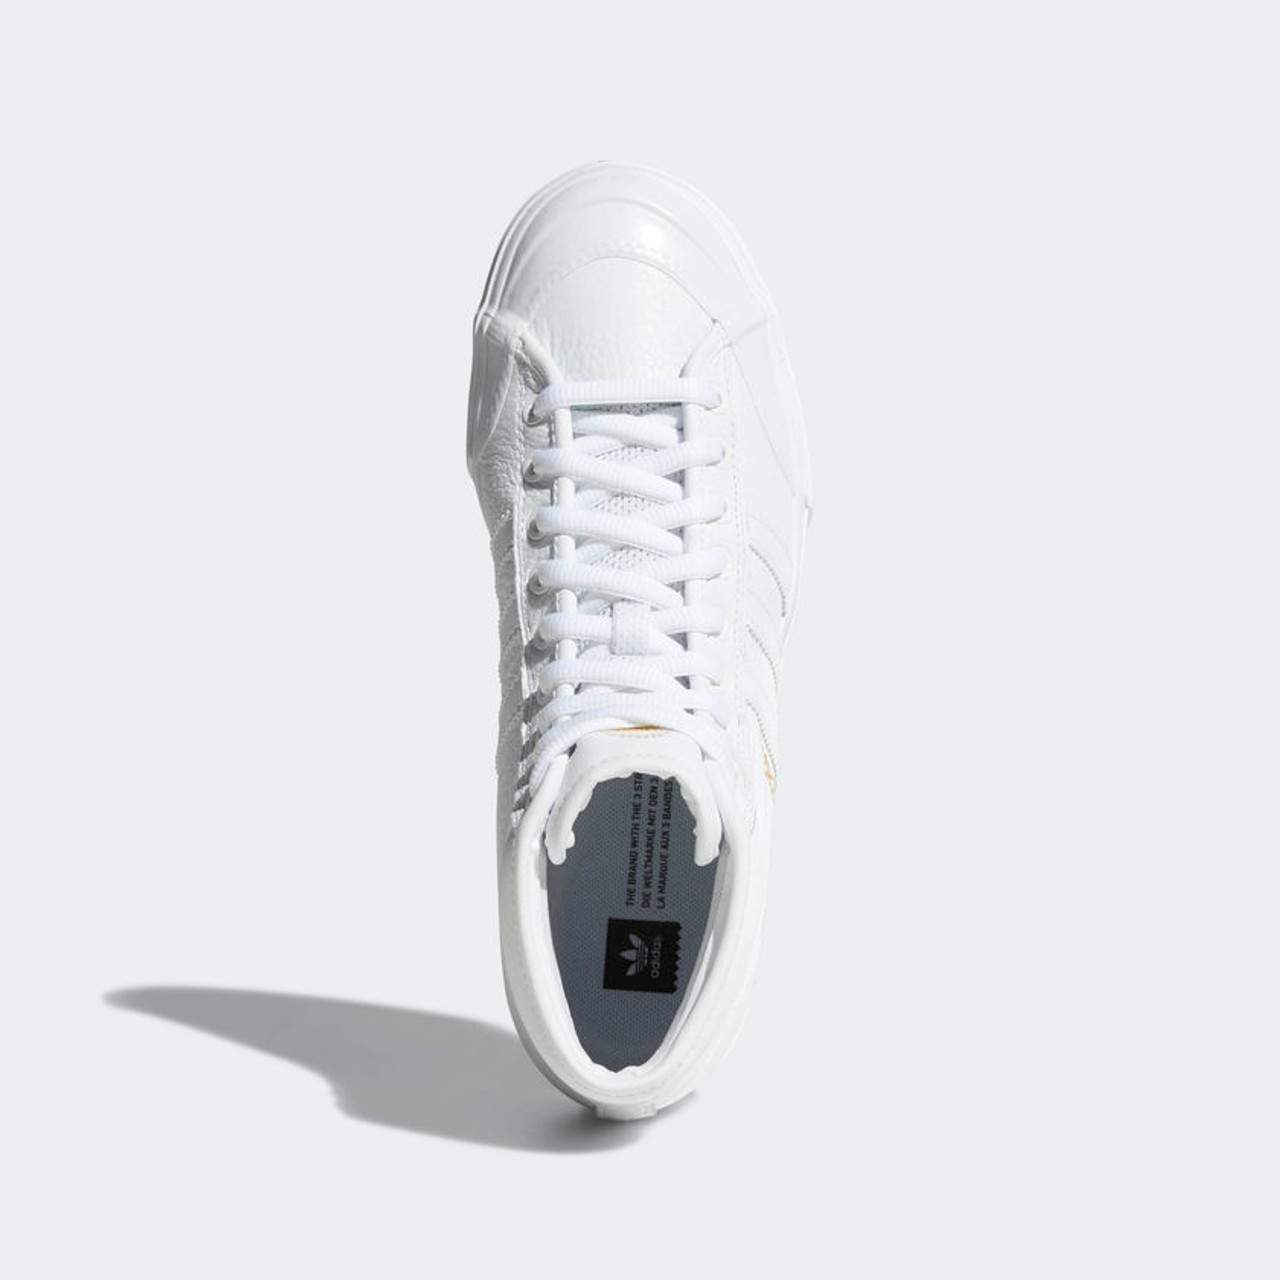 adidas matchcourt white leather